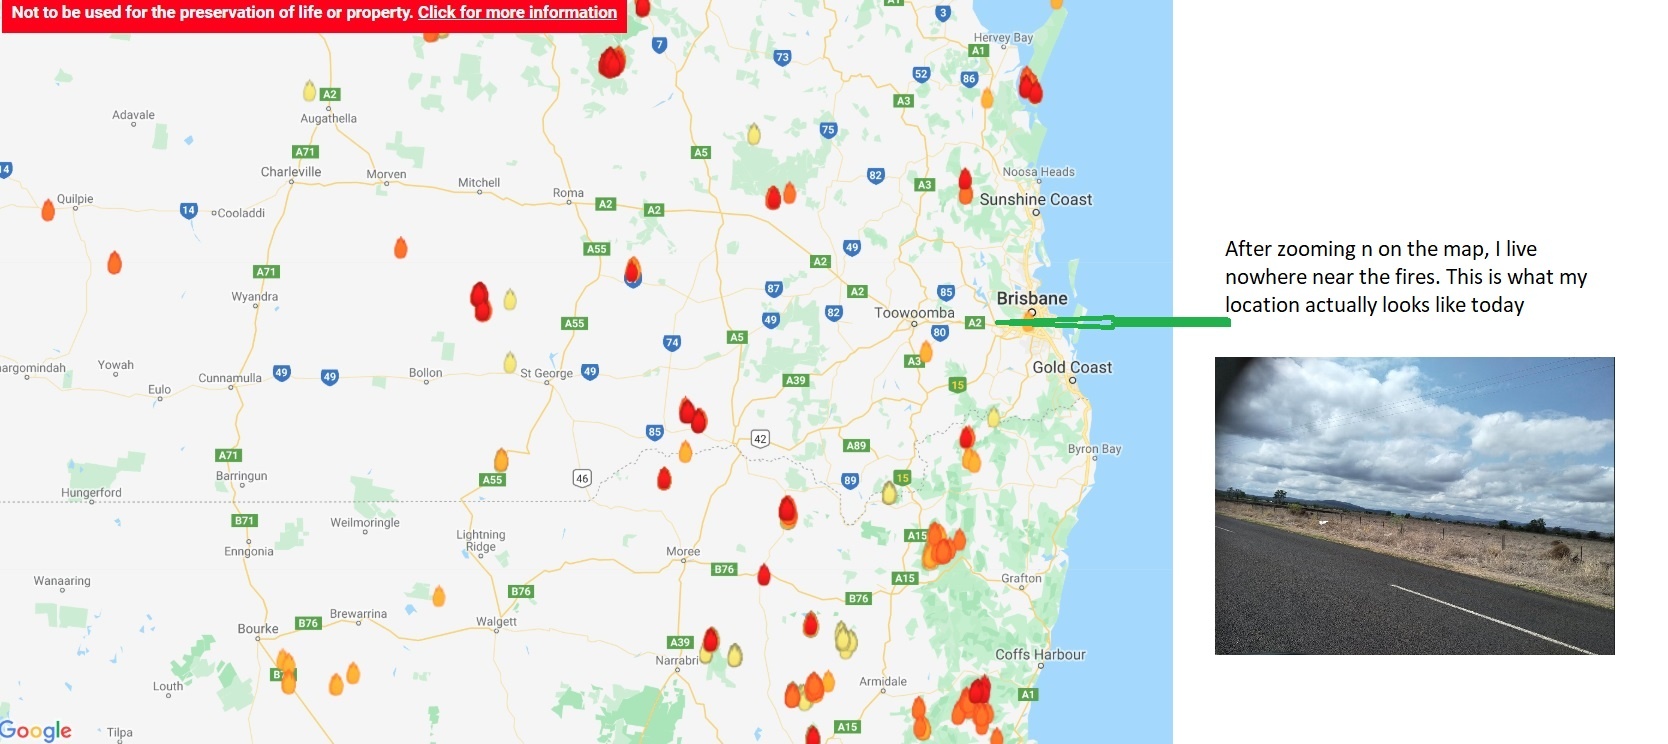 Aust Fire Maps Jan 2020 Brisbane - Location